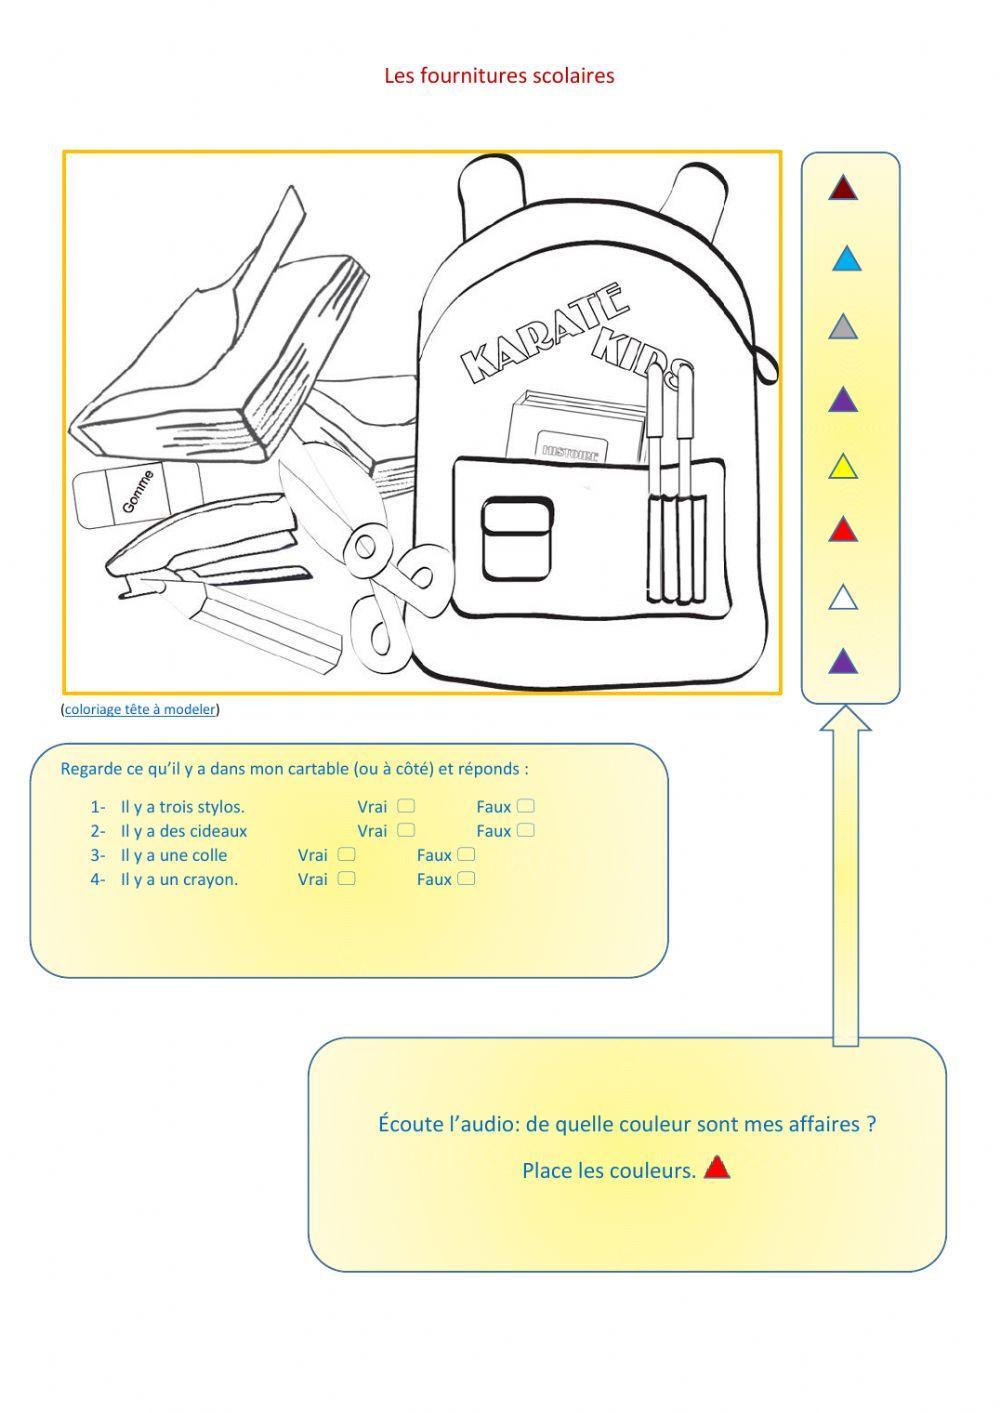 Materiel fournitures scolaires 2 worksheet